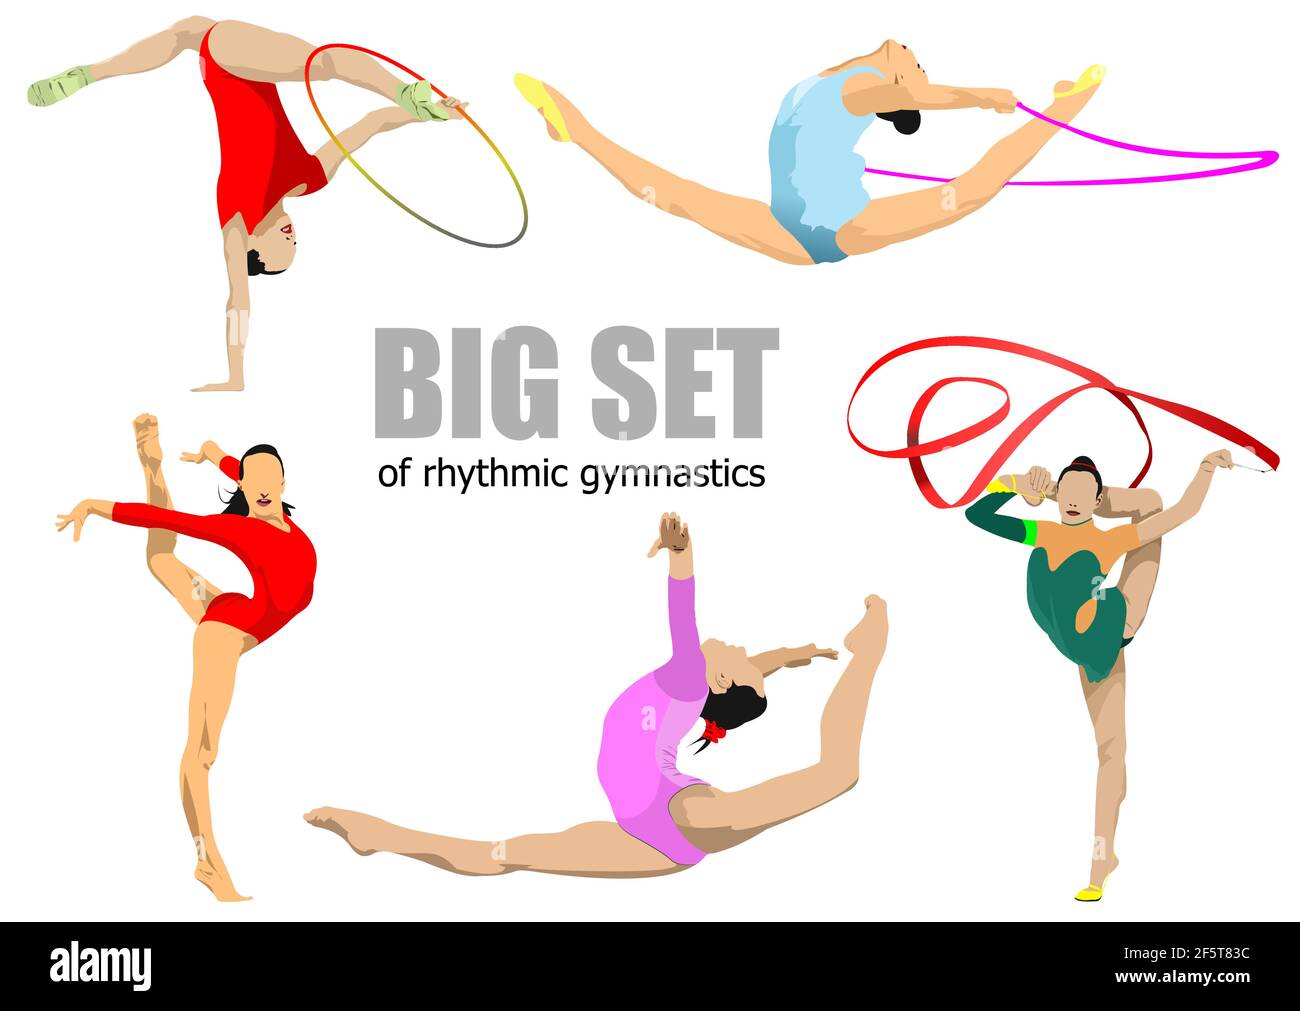 2,594 Rhythmic Gymnastics Equipment Images, Stock Photos, 3D objects, &  Vectors